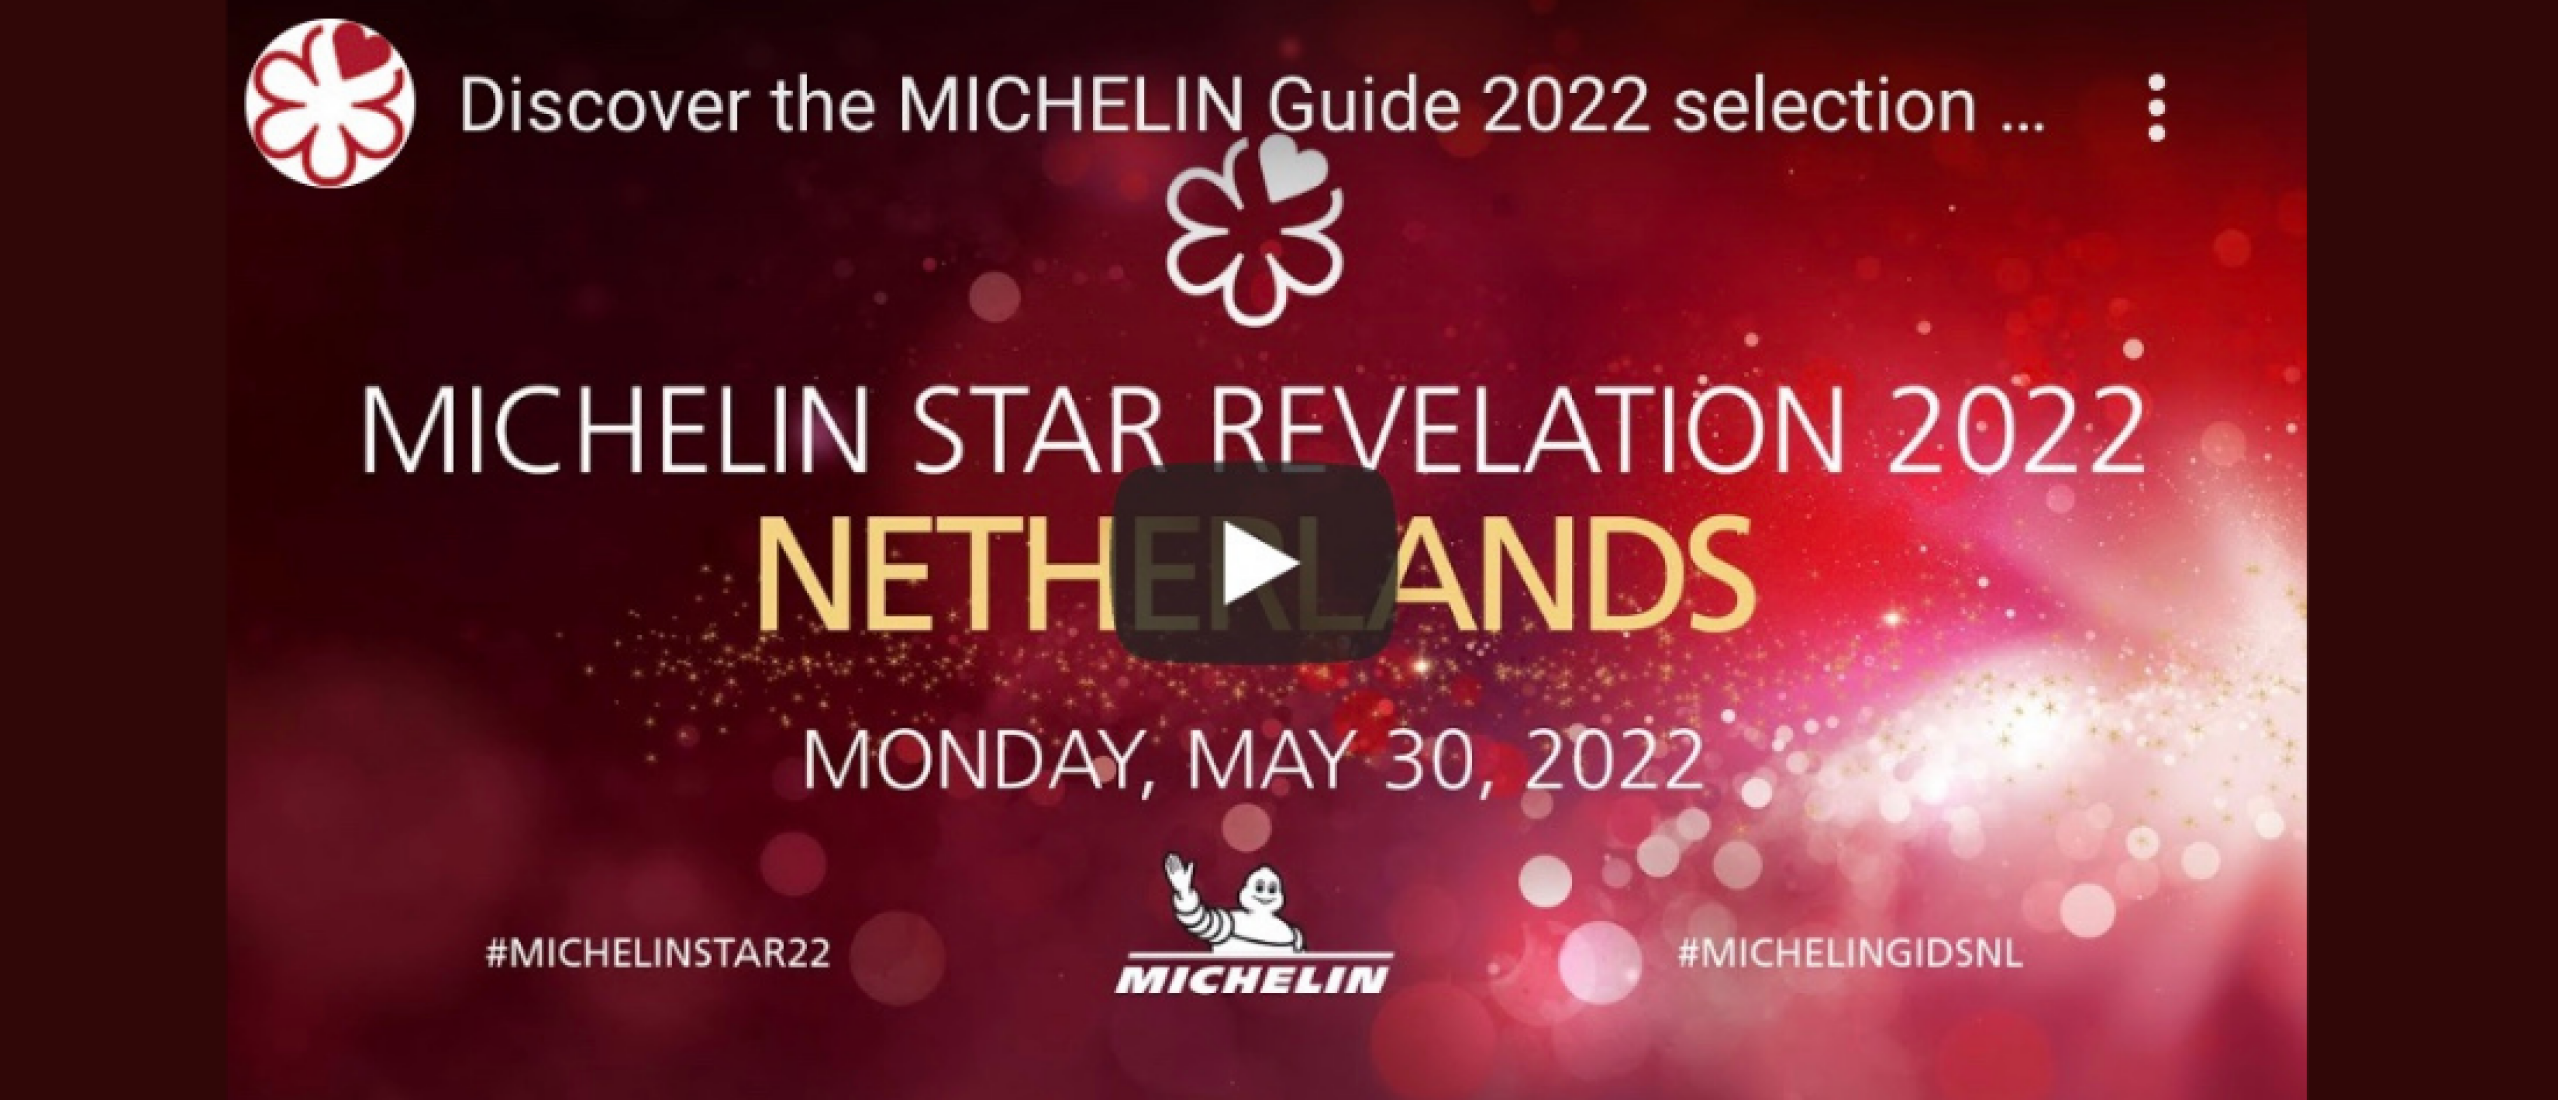 Michelin sterrenuitreiking 2022 live